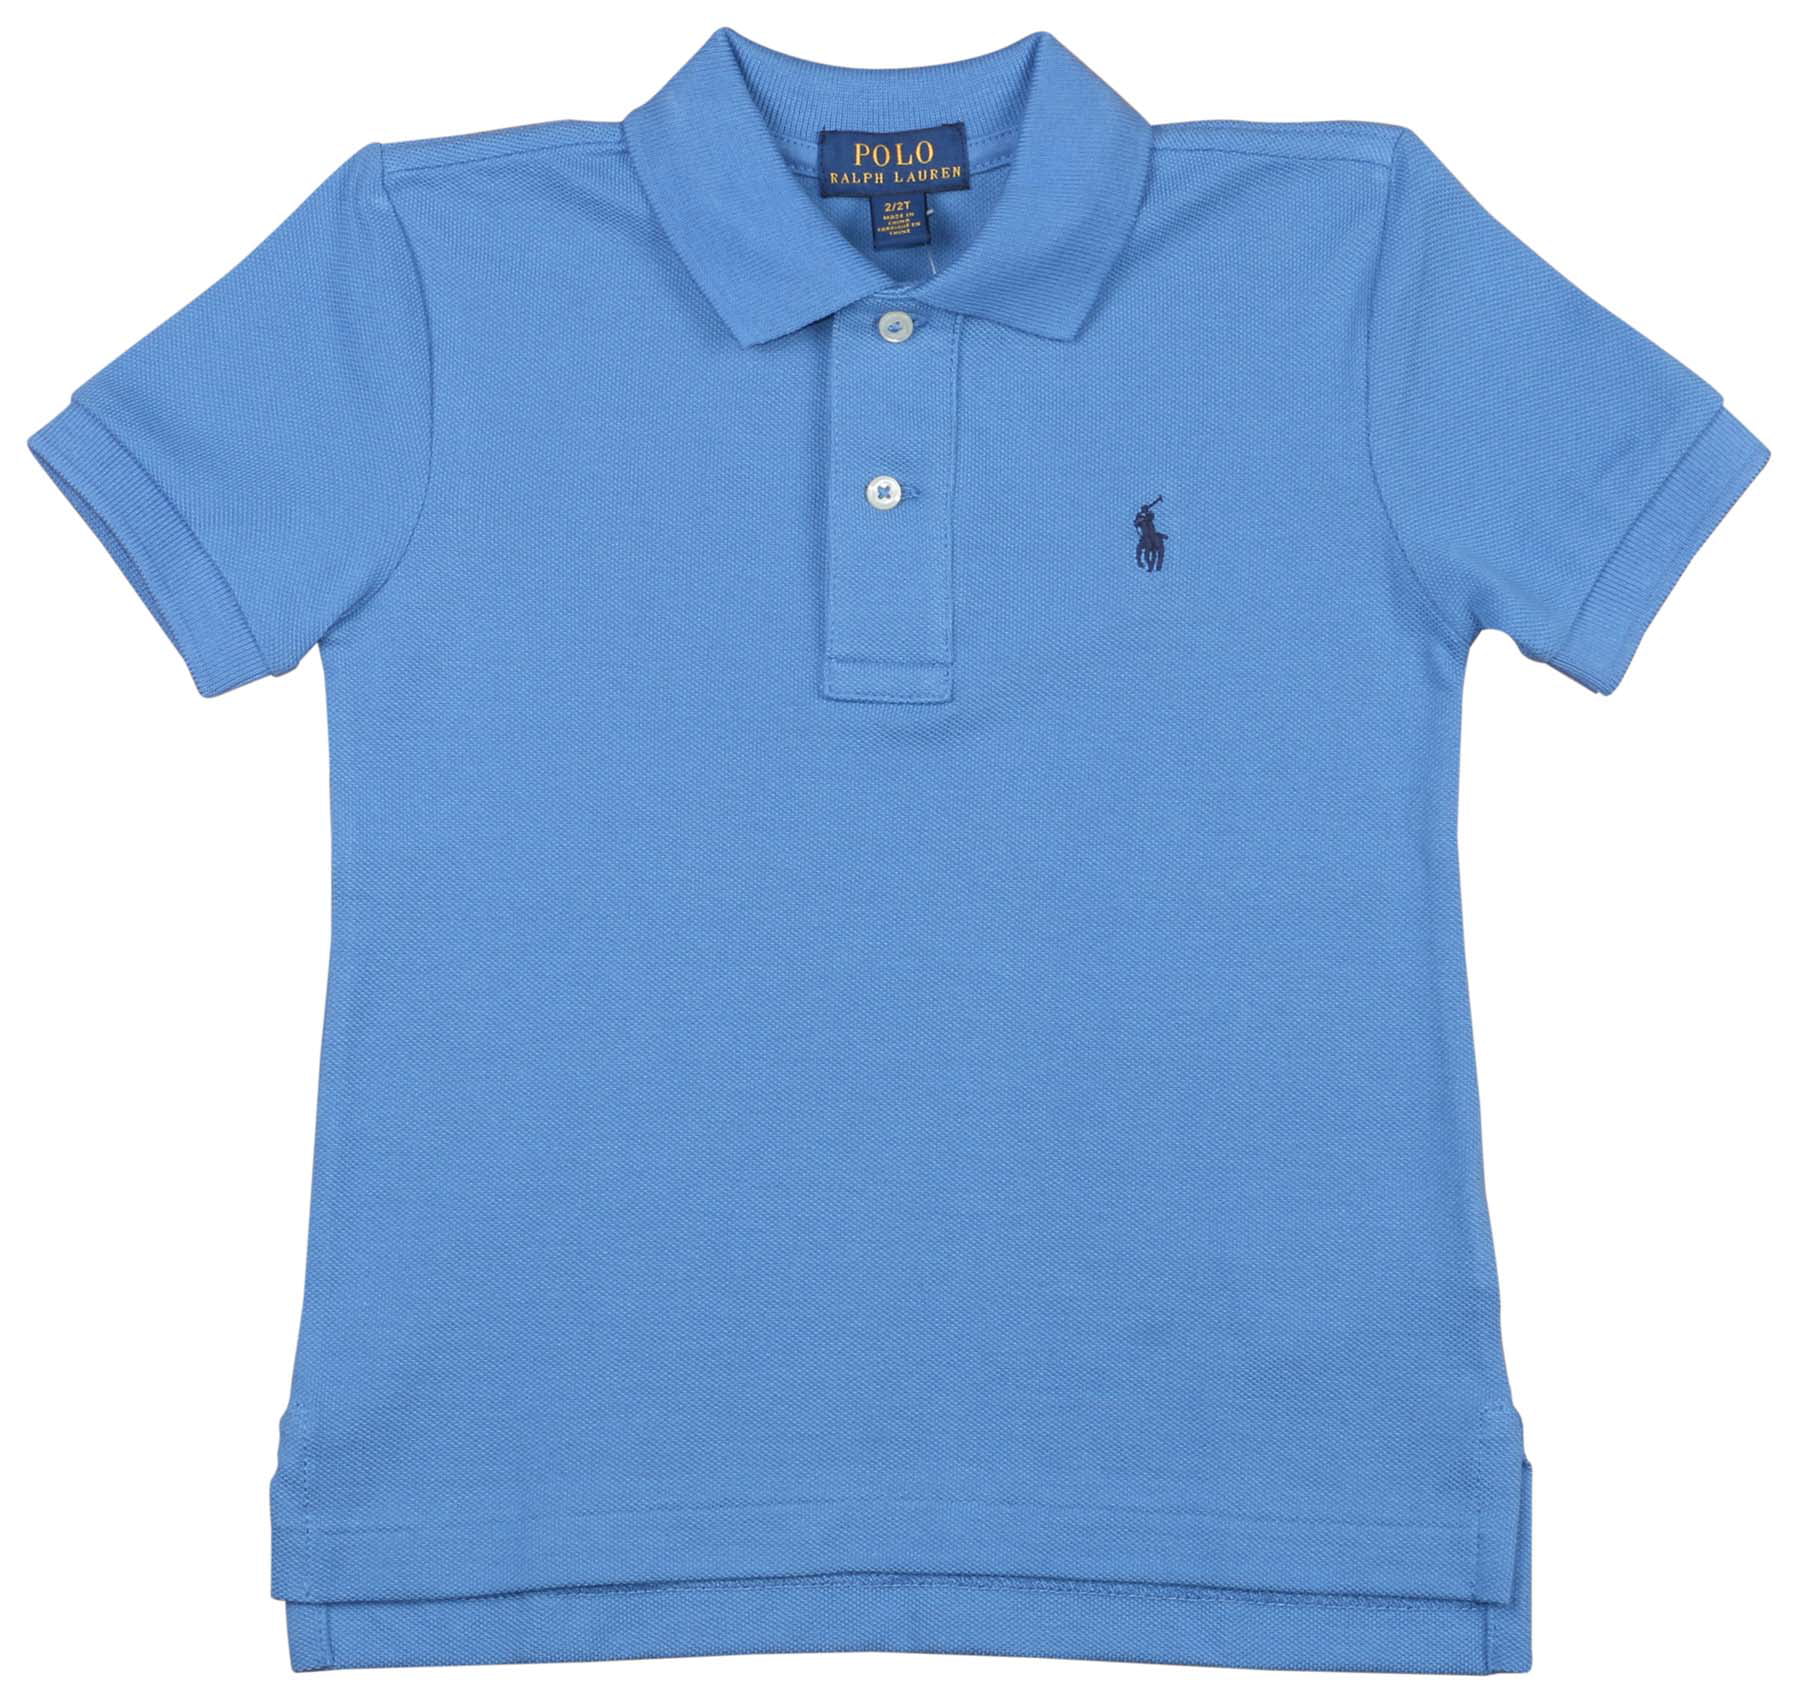 Polo Ralph Lauren - Polo RL Toddler Boy's (2T-5T) Mesh Polo Shirt (Blue